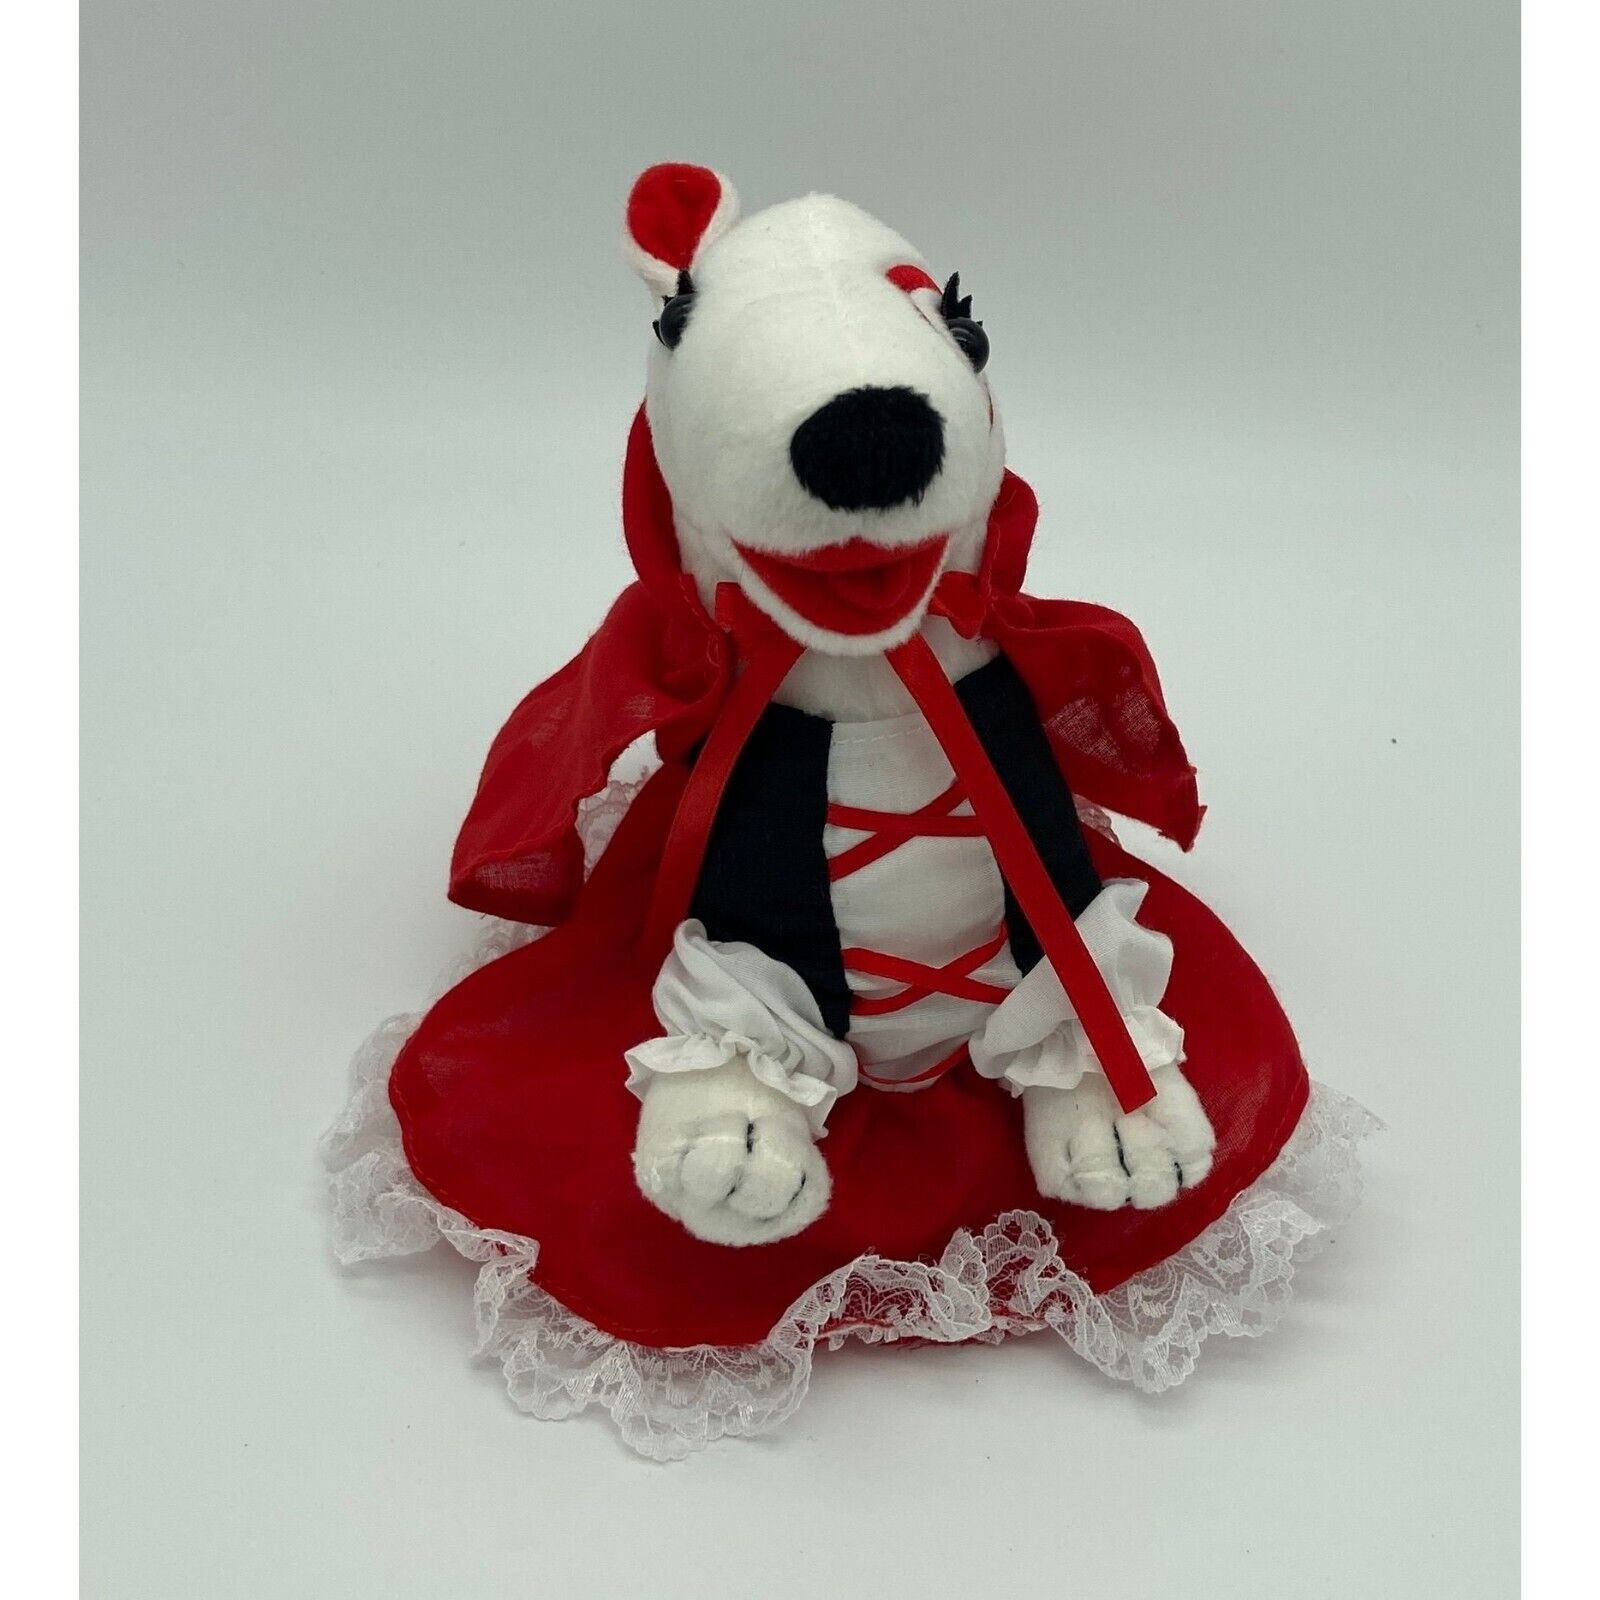 Target Bullseye Plush Stuffed Animal 2016 Little Red Riding Hood Dog 1310/2000